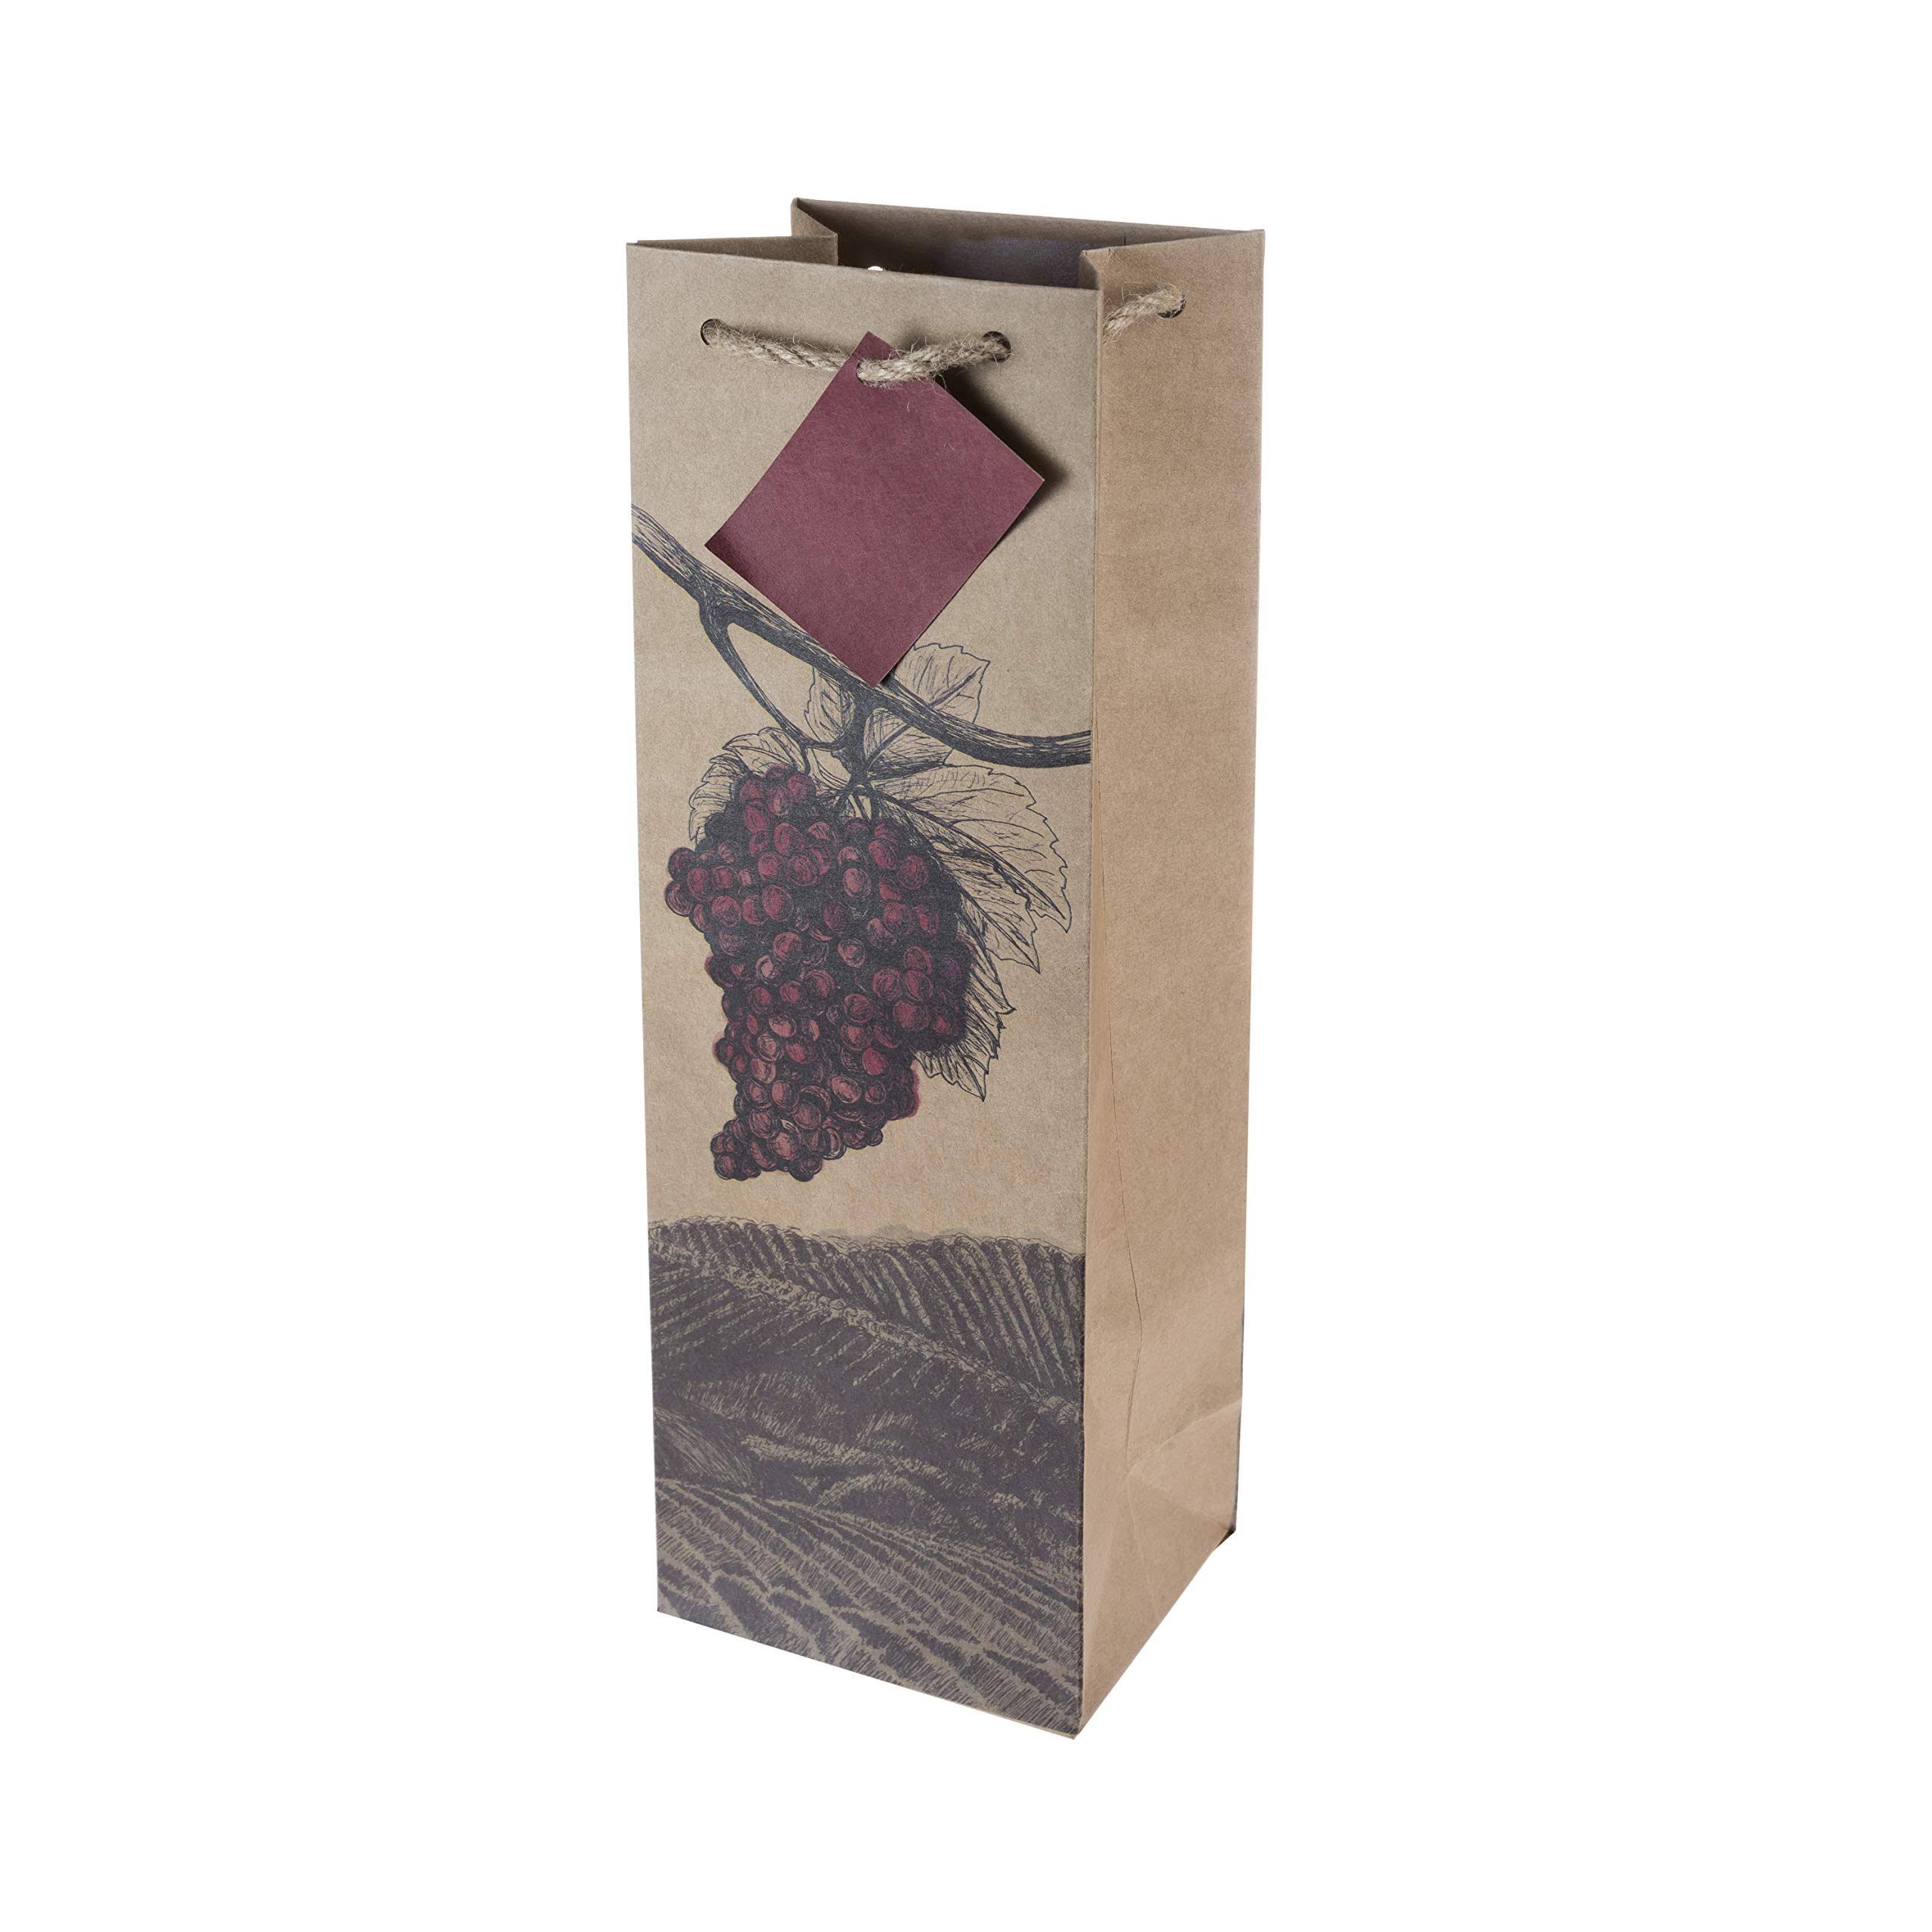 Illustrated Grapes Single Bottle Wine Bag Cakewalk (Bags) Brown Paper Gift Bags